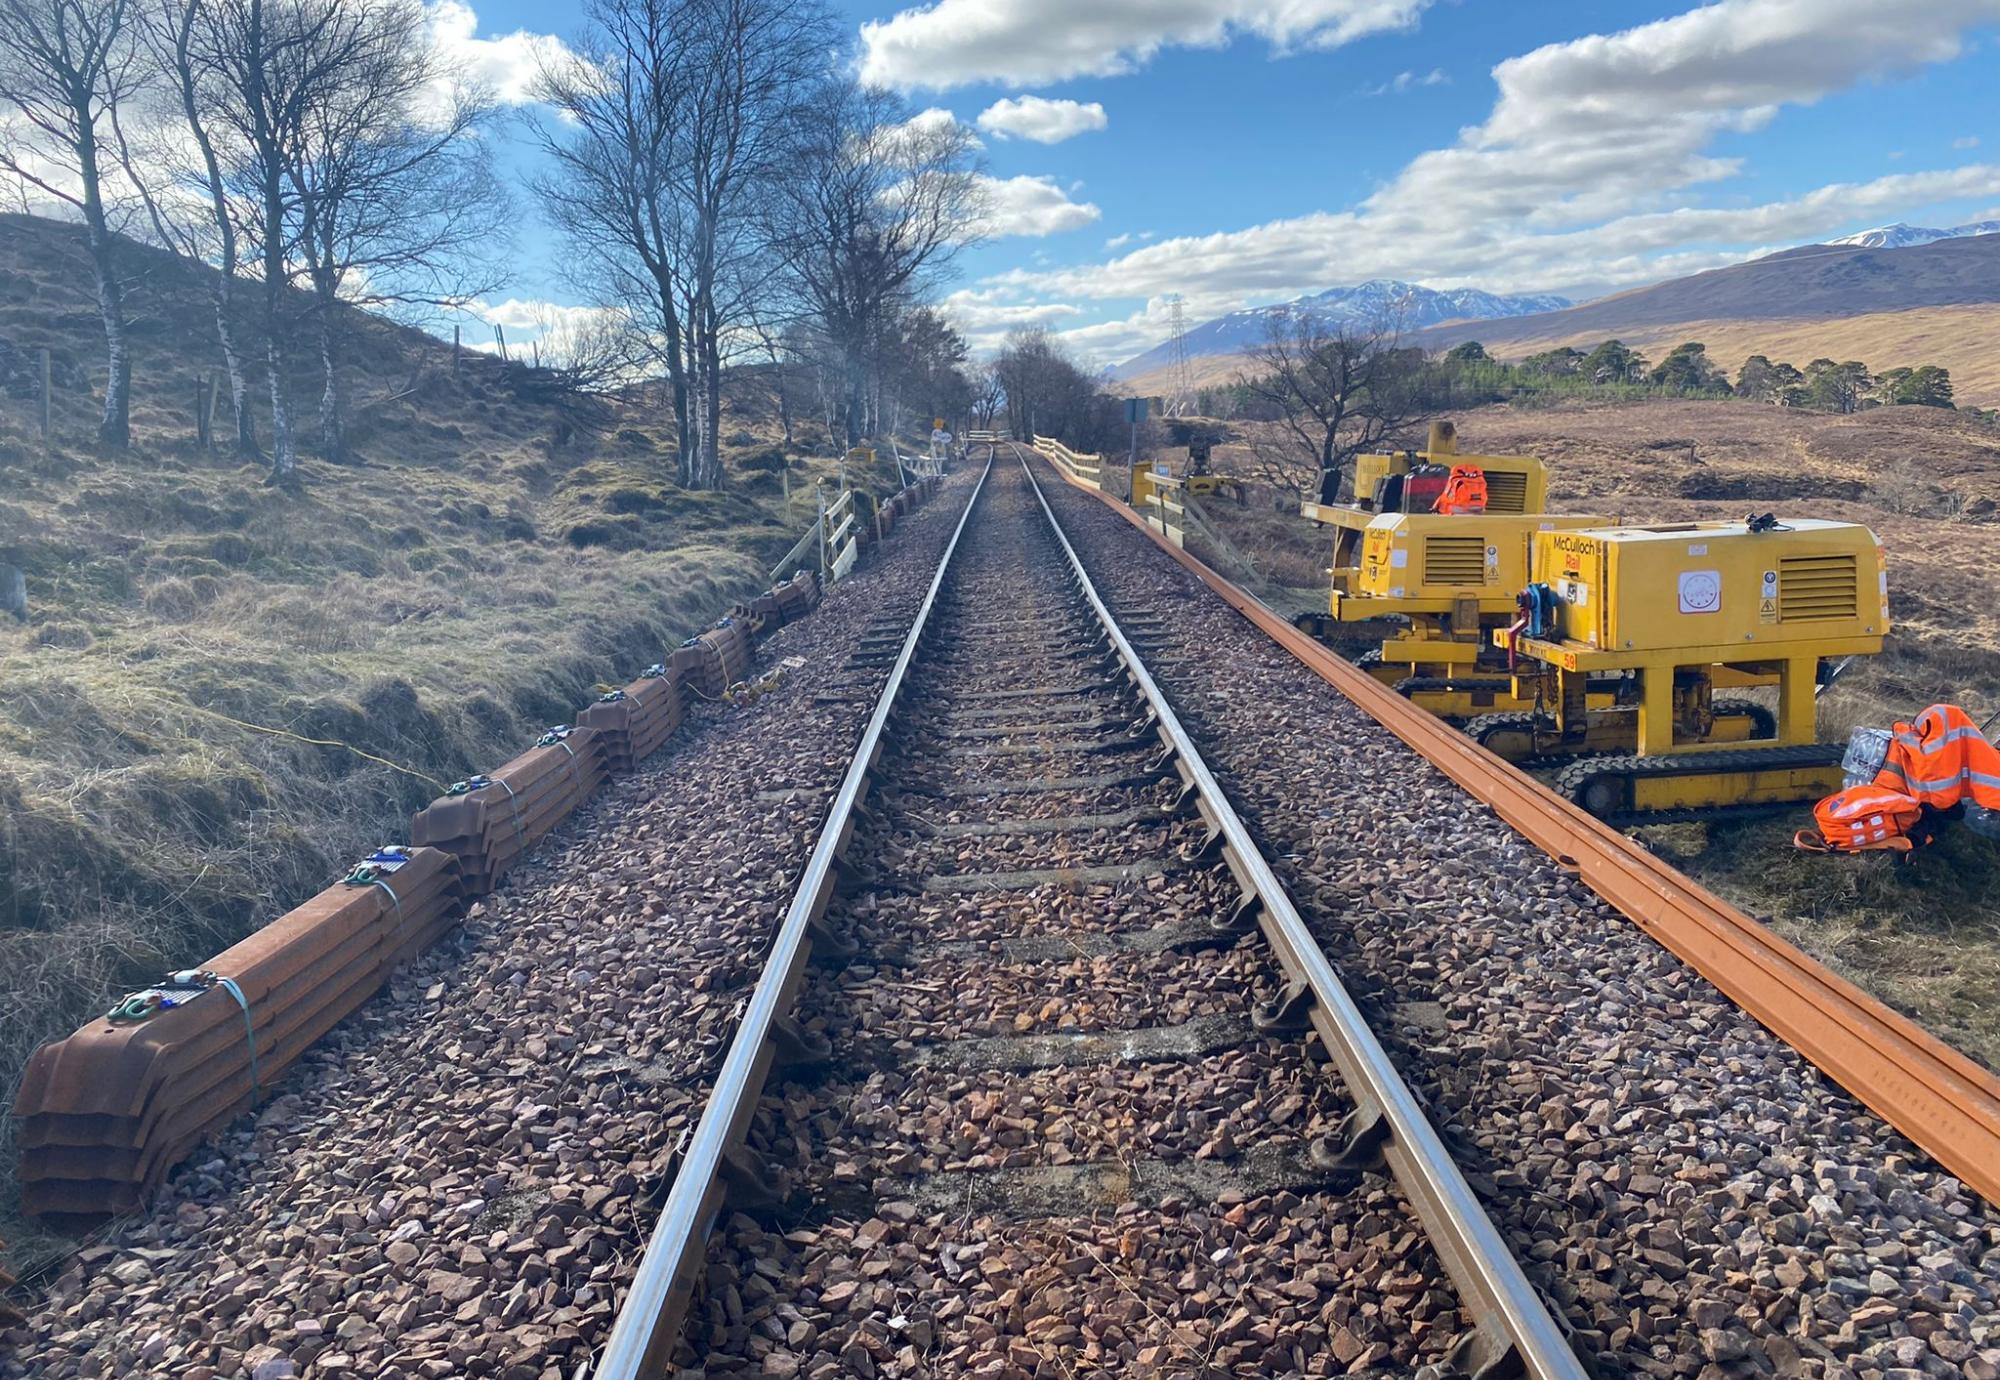 Work on West Highland Line